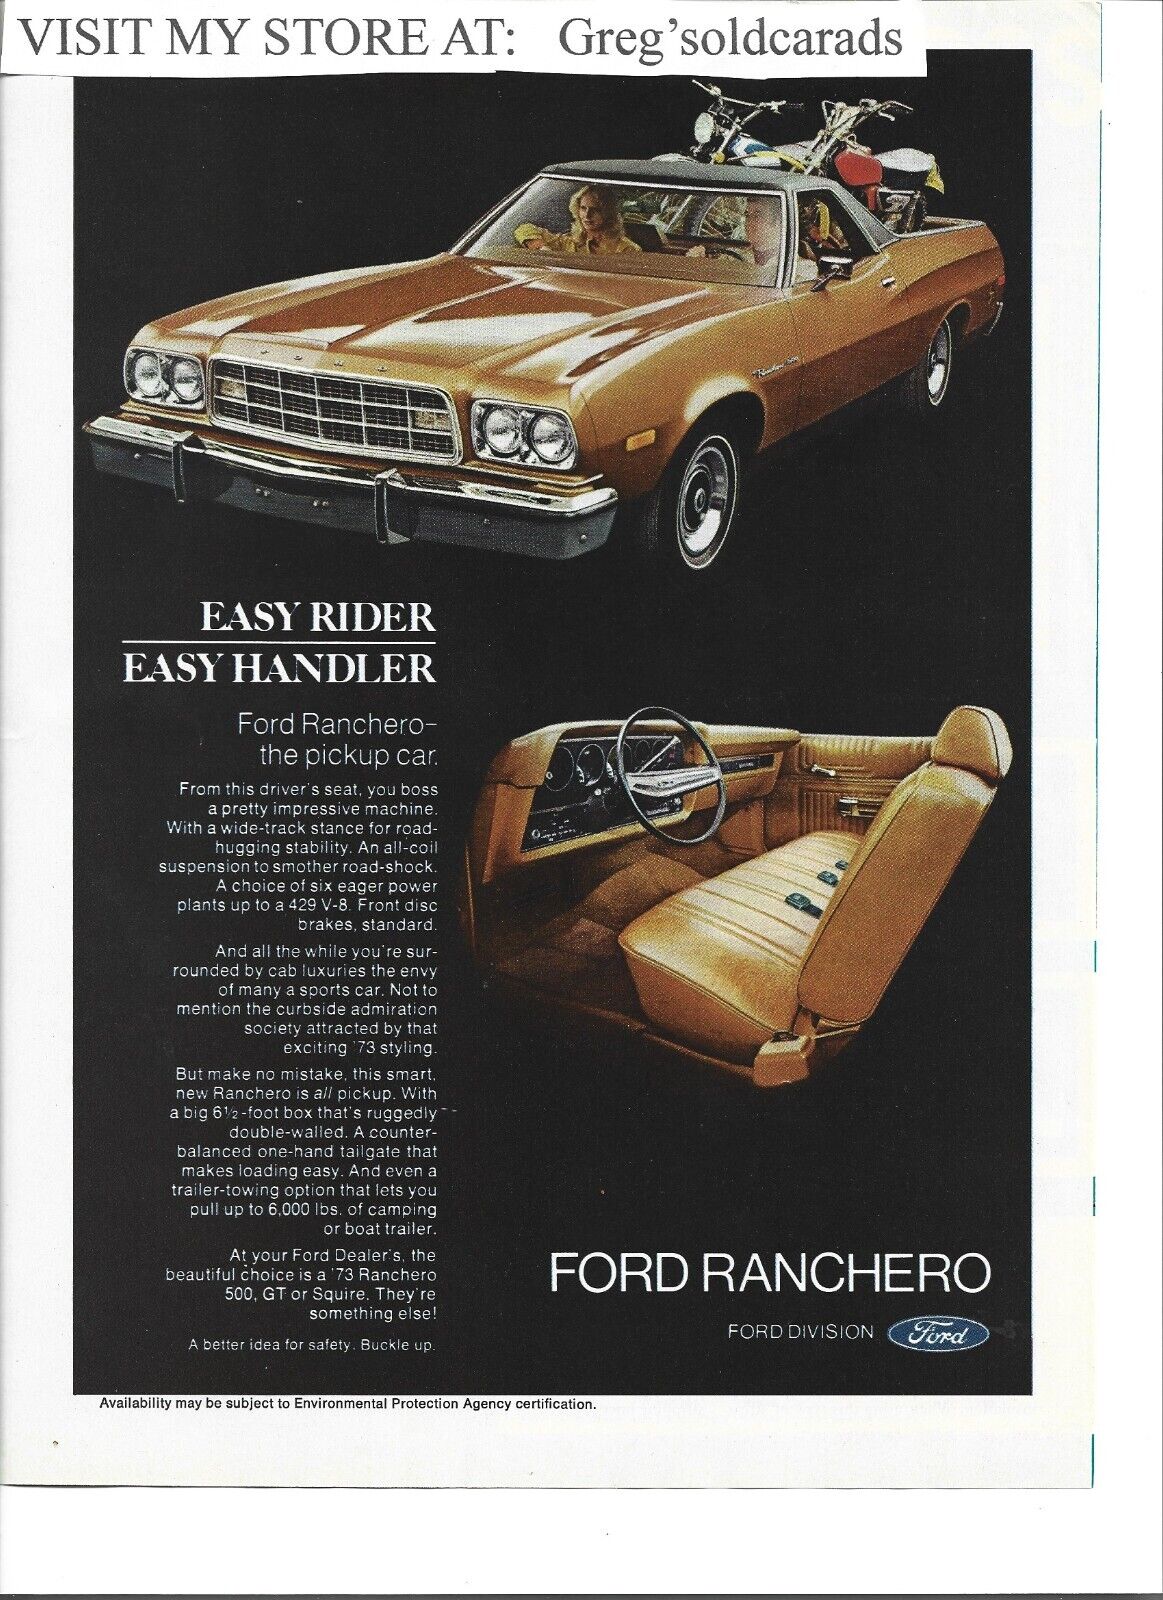 Original 1973 Ford Ranchero vintage print ad: \